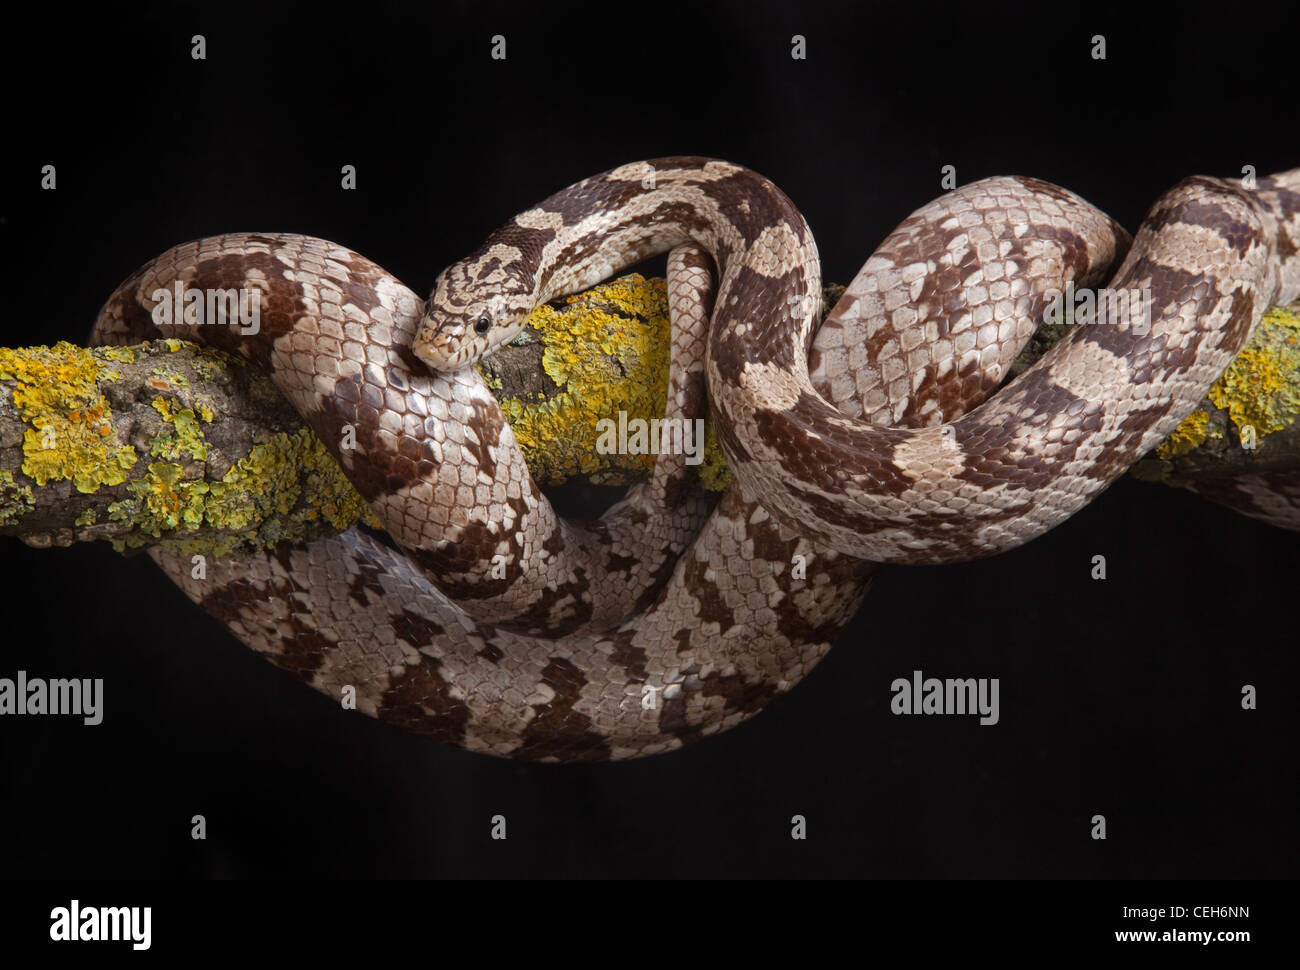 Corn Snake Pantherophis guttatus Stock Photo